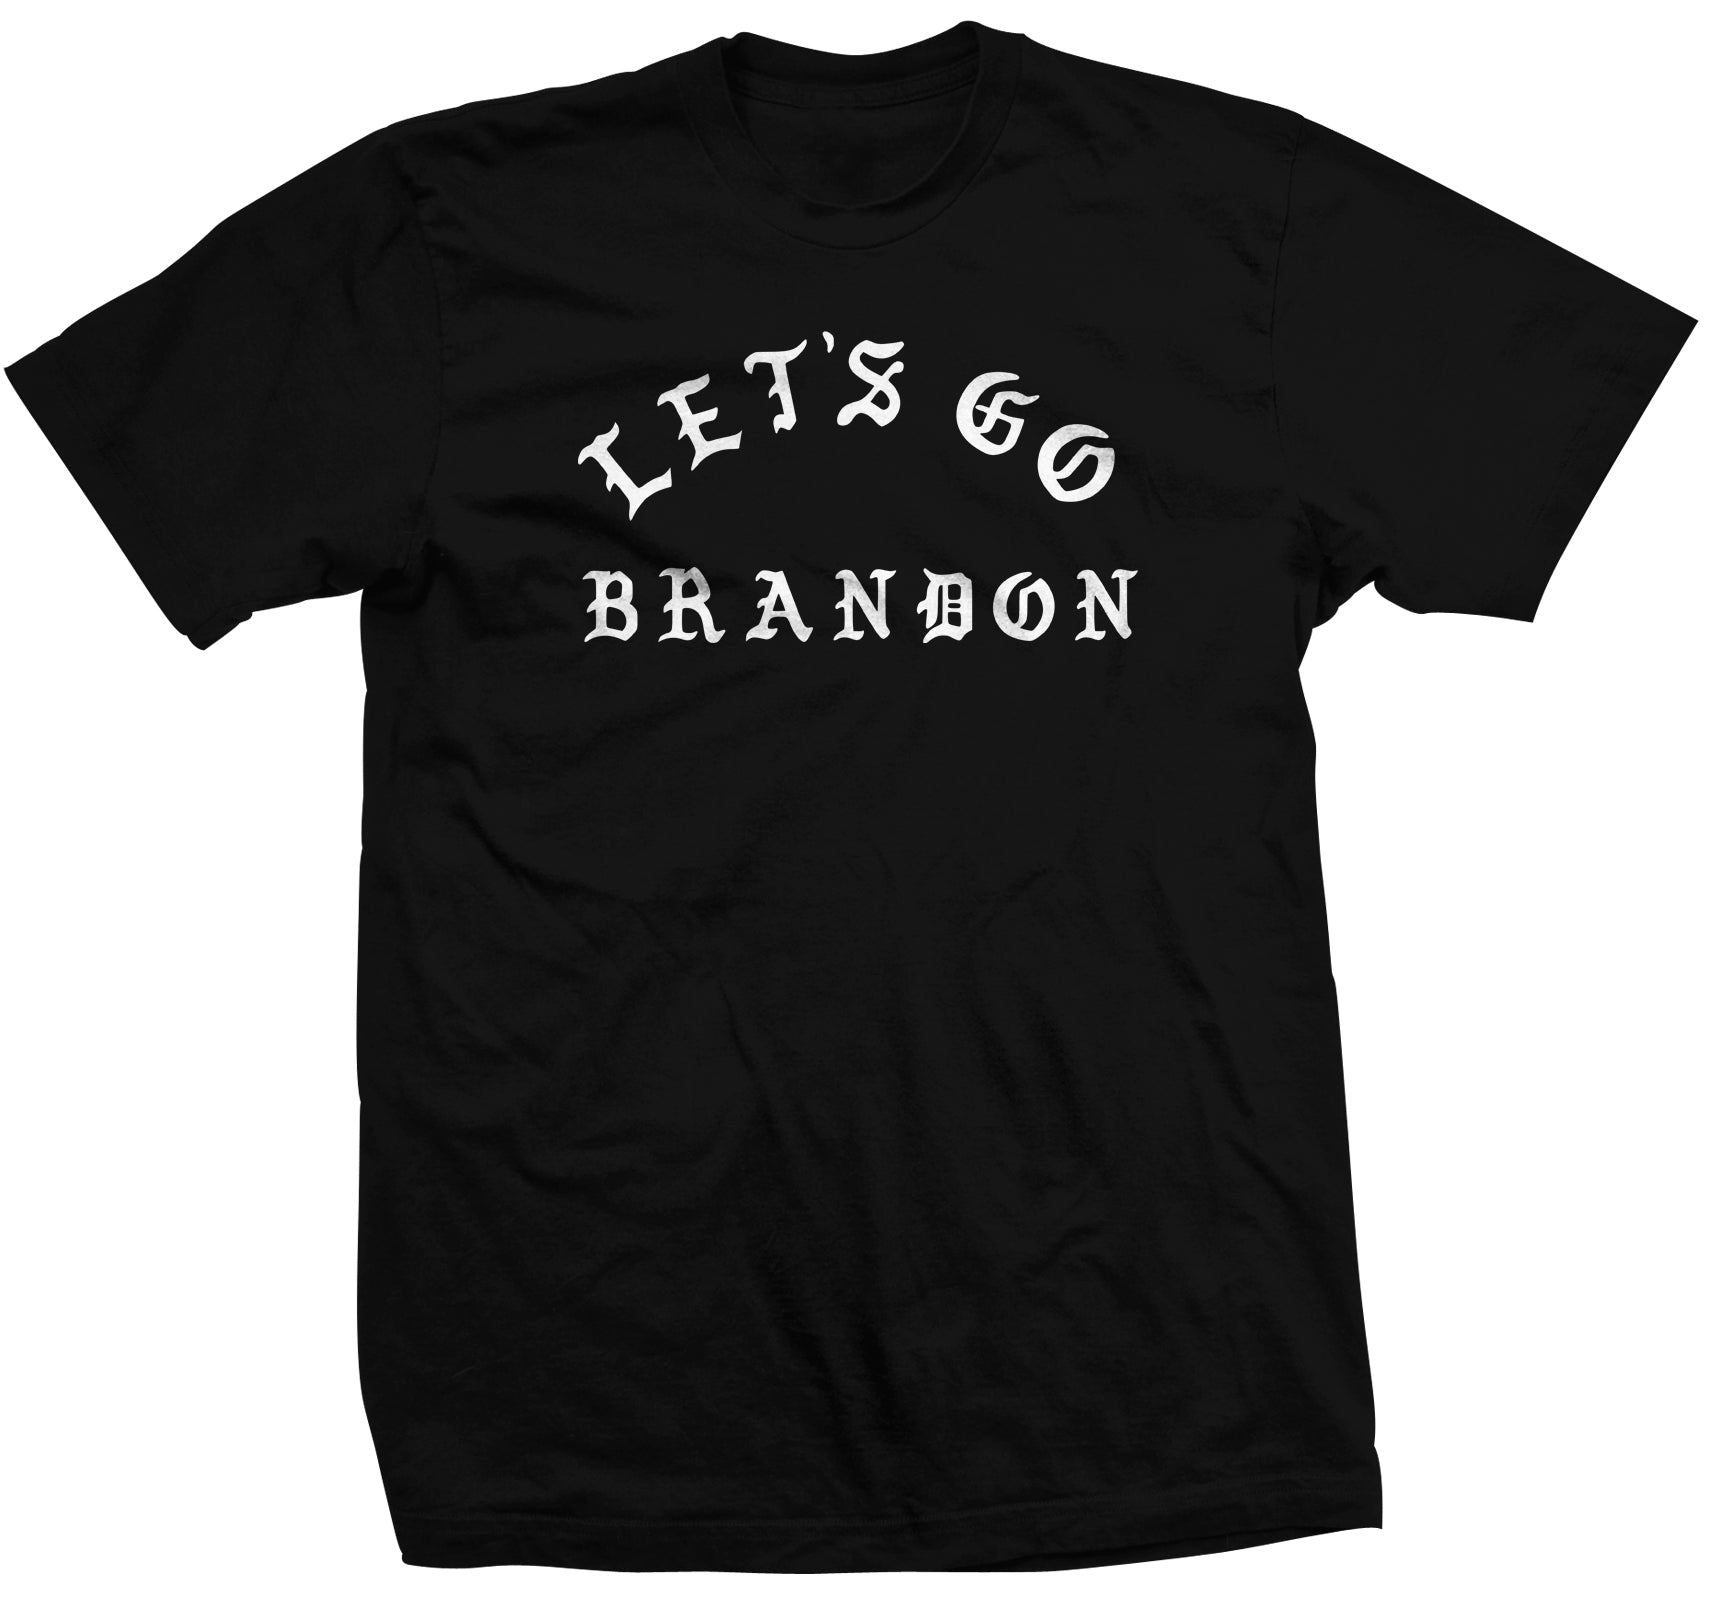 Let's Go Brandon Tee - Black / White - Randall Pich